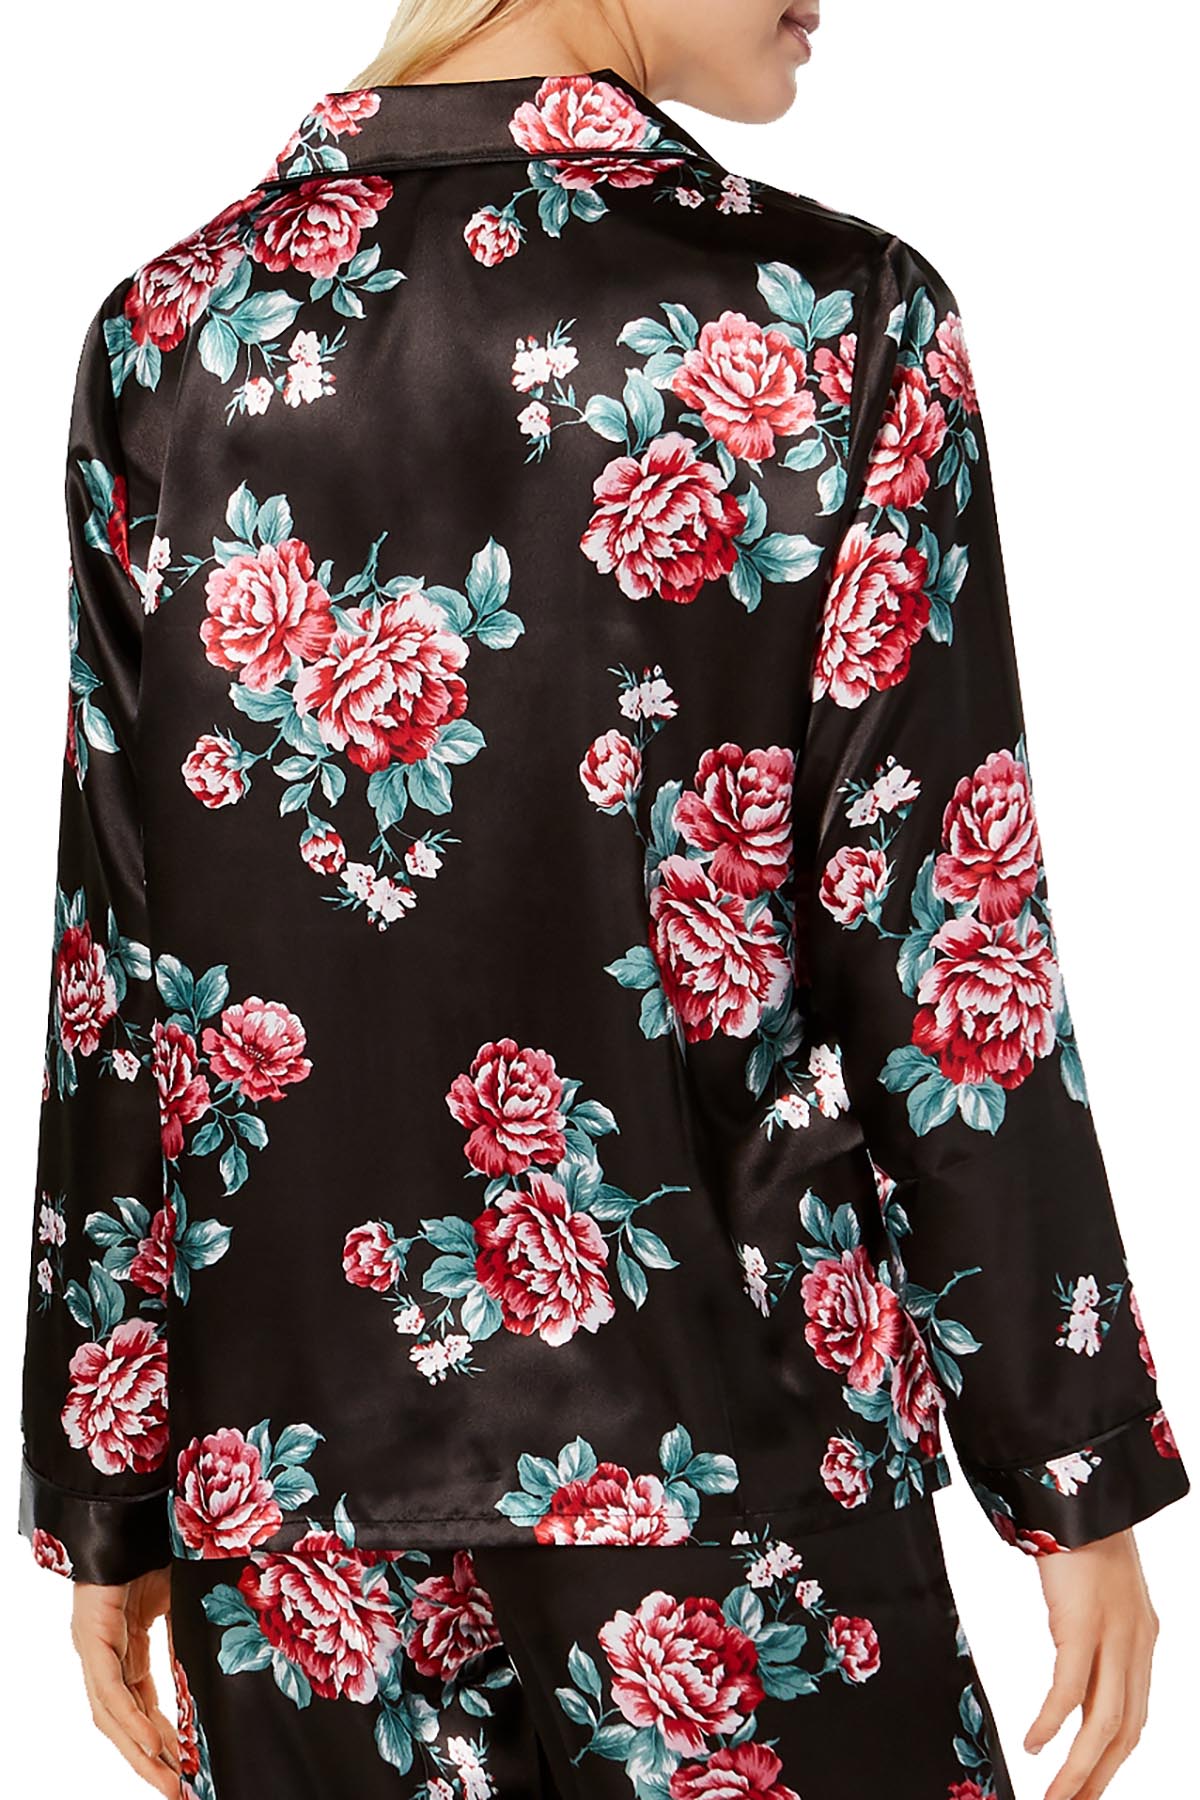 Thalia Sodi Intimates Black/Floral Printed Pajama Top